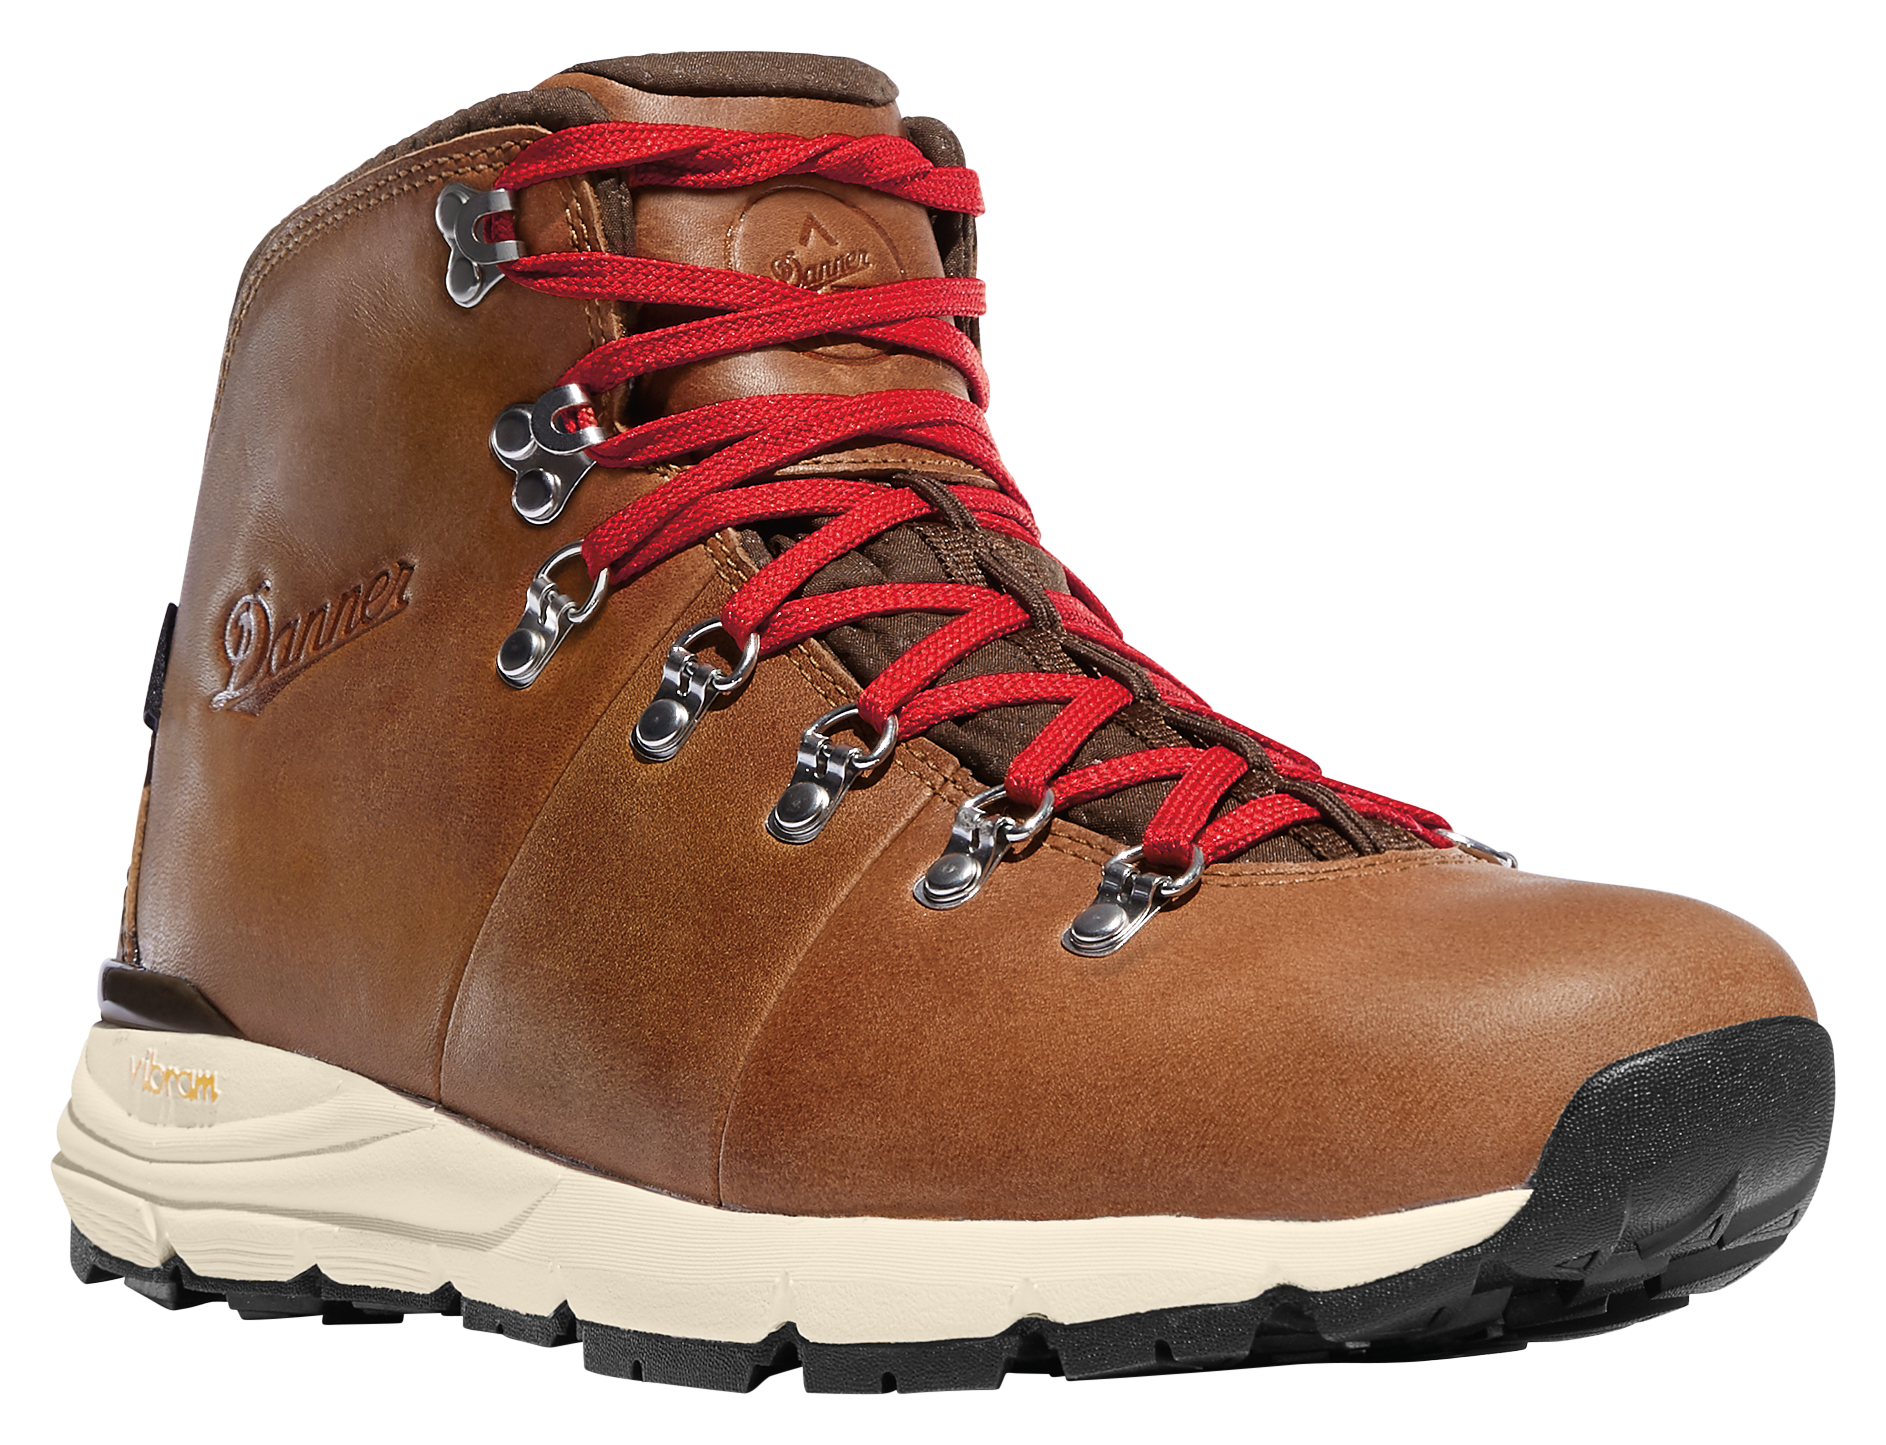 Danner Mountain 600 Waterproof Hiking Boots for Men - Saddle Tan - 8M